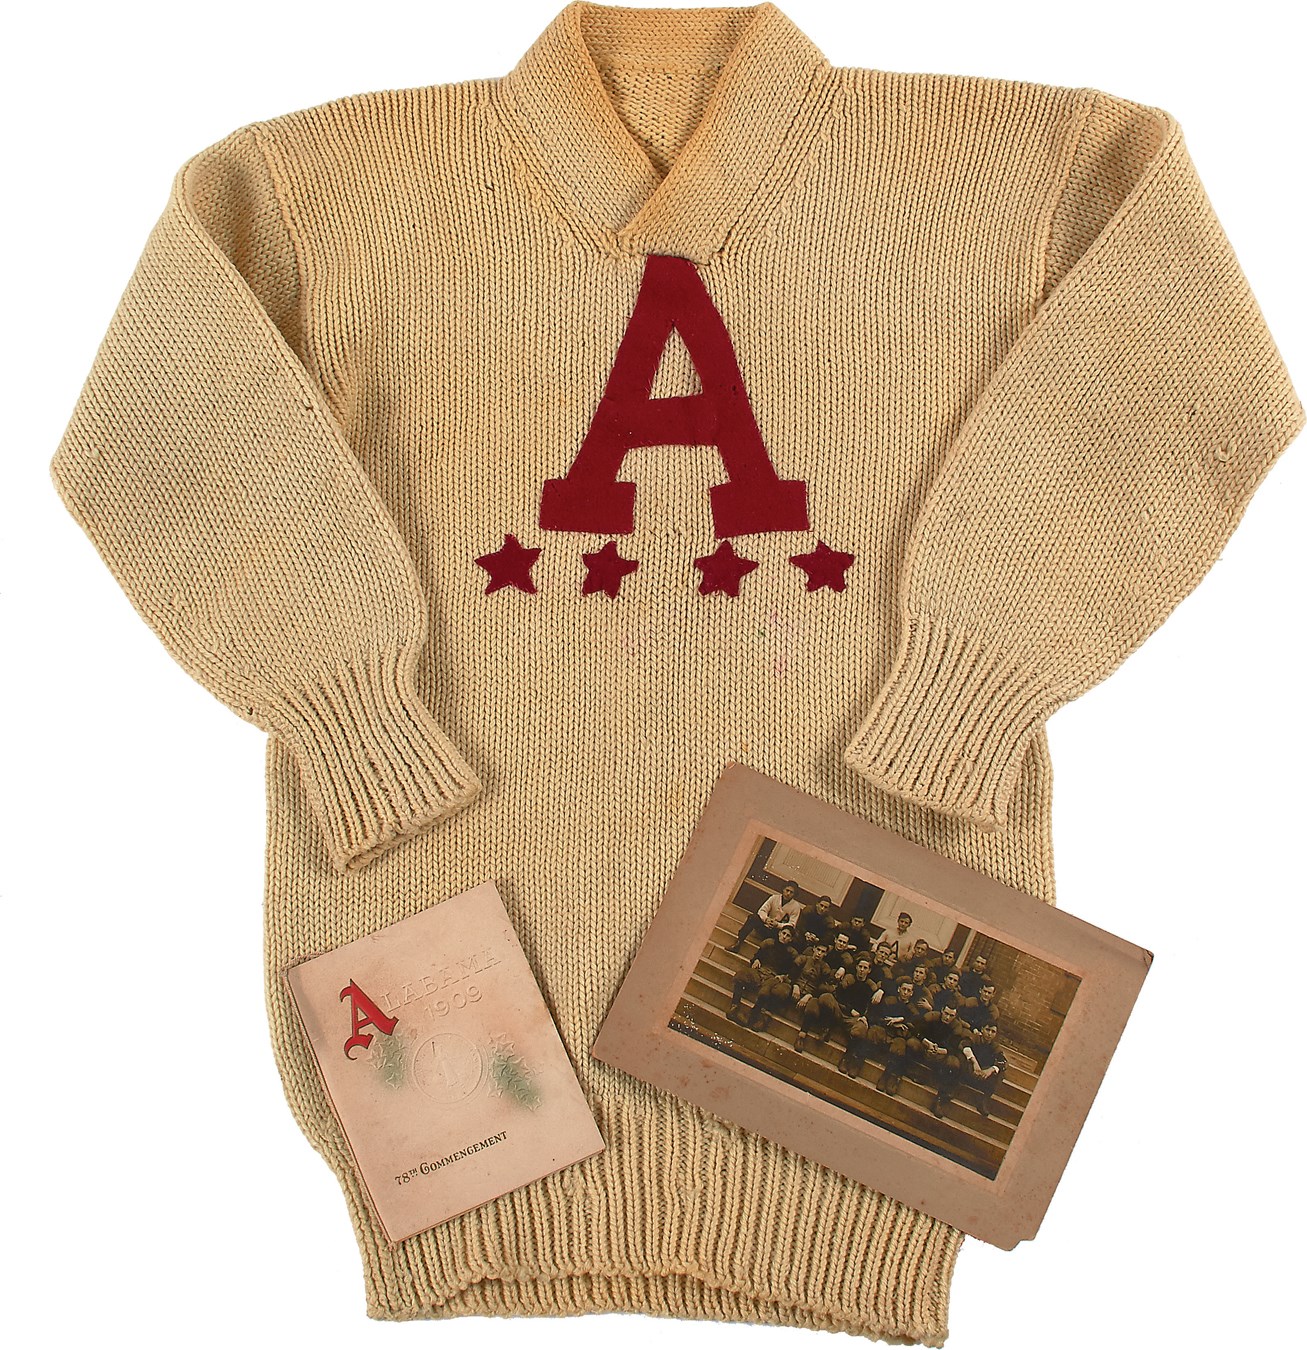 - 1909-10 U of Alabama Football Letterman's Sweater w/Vintage Photo Documentation